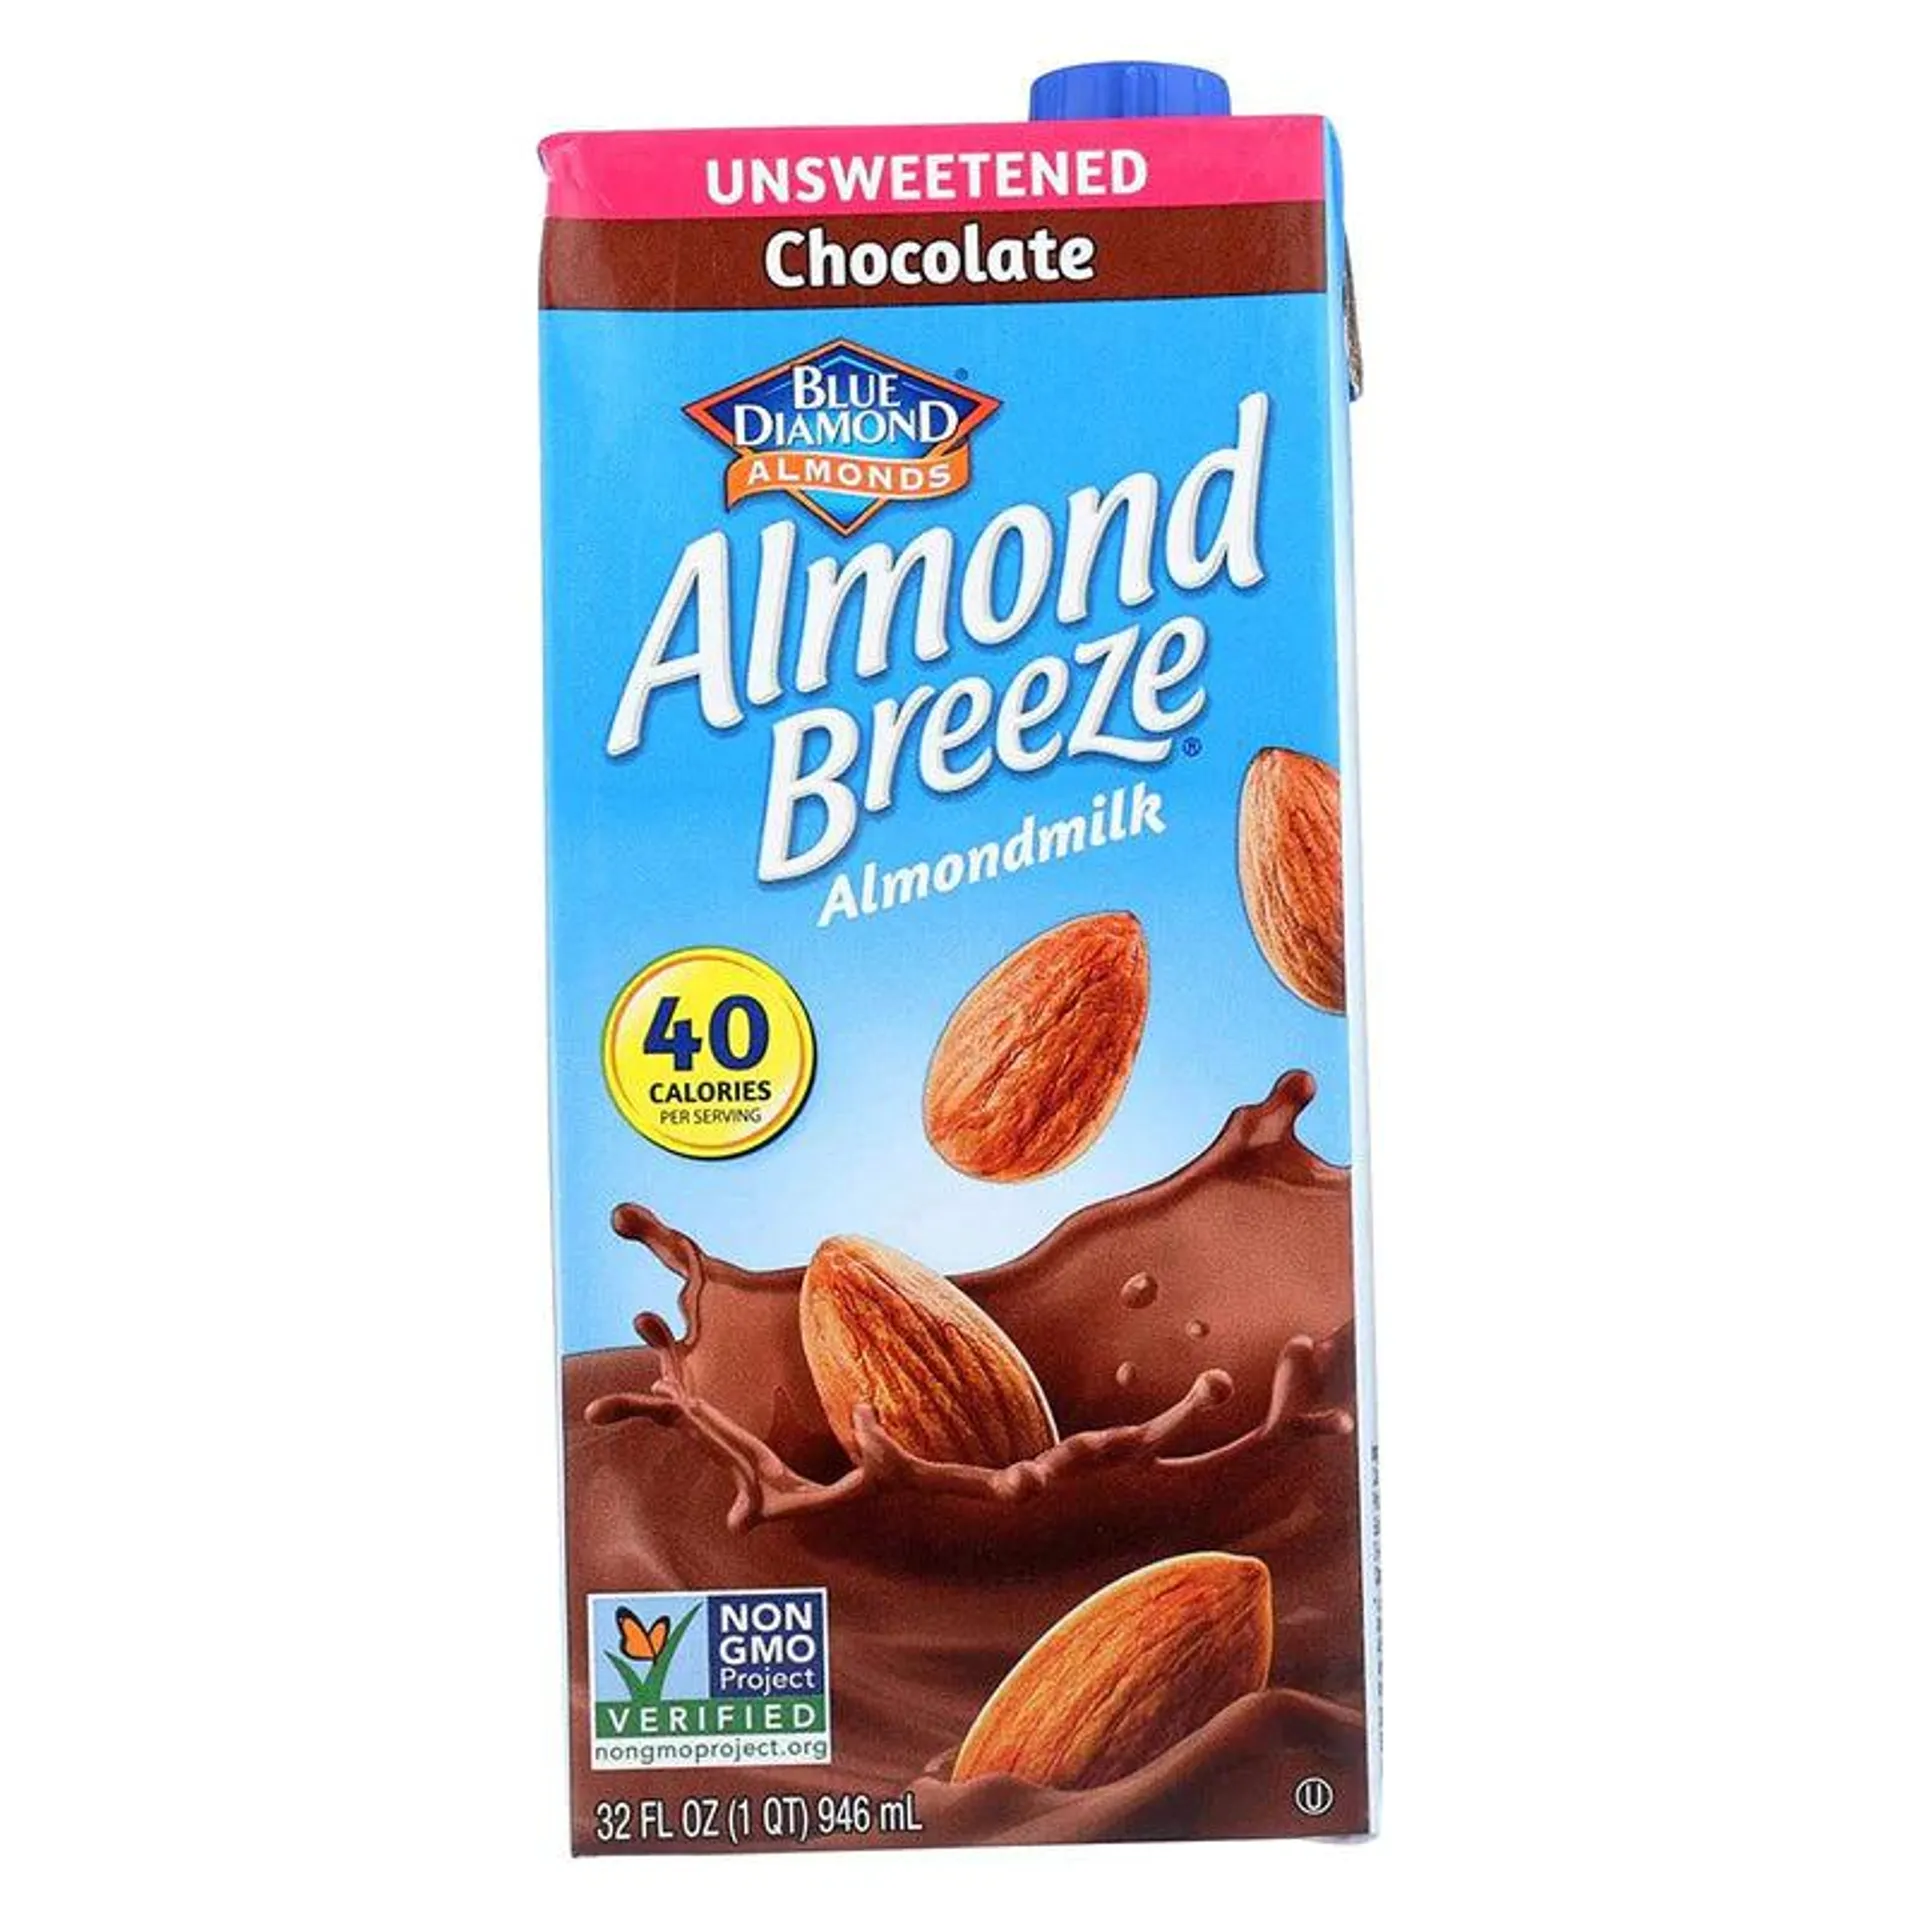 Unsweetened Chocolate Almond